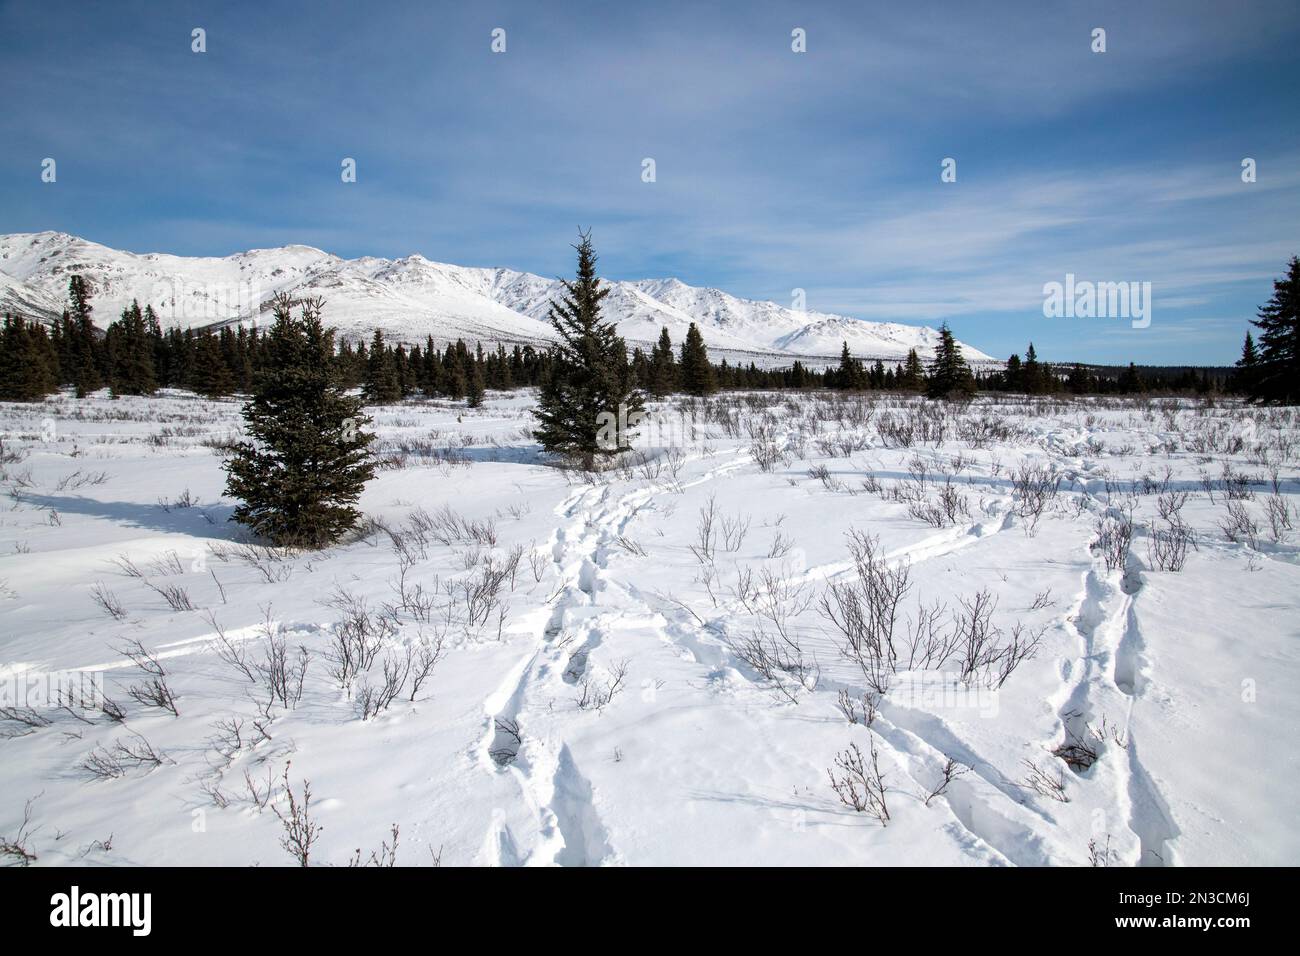 Moose (Alces alces) tracks in late winter snow at Mountain Vista; Denali National Park & Preserve, Interior Alaska, Alaska, United States of America Stock Photo